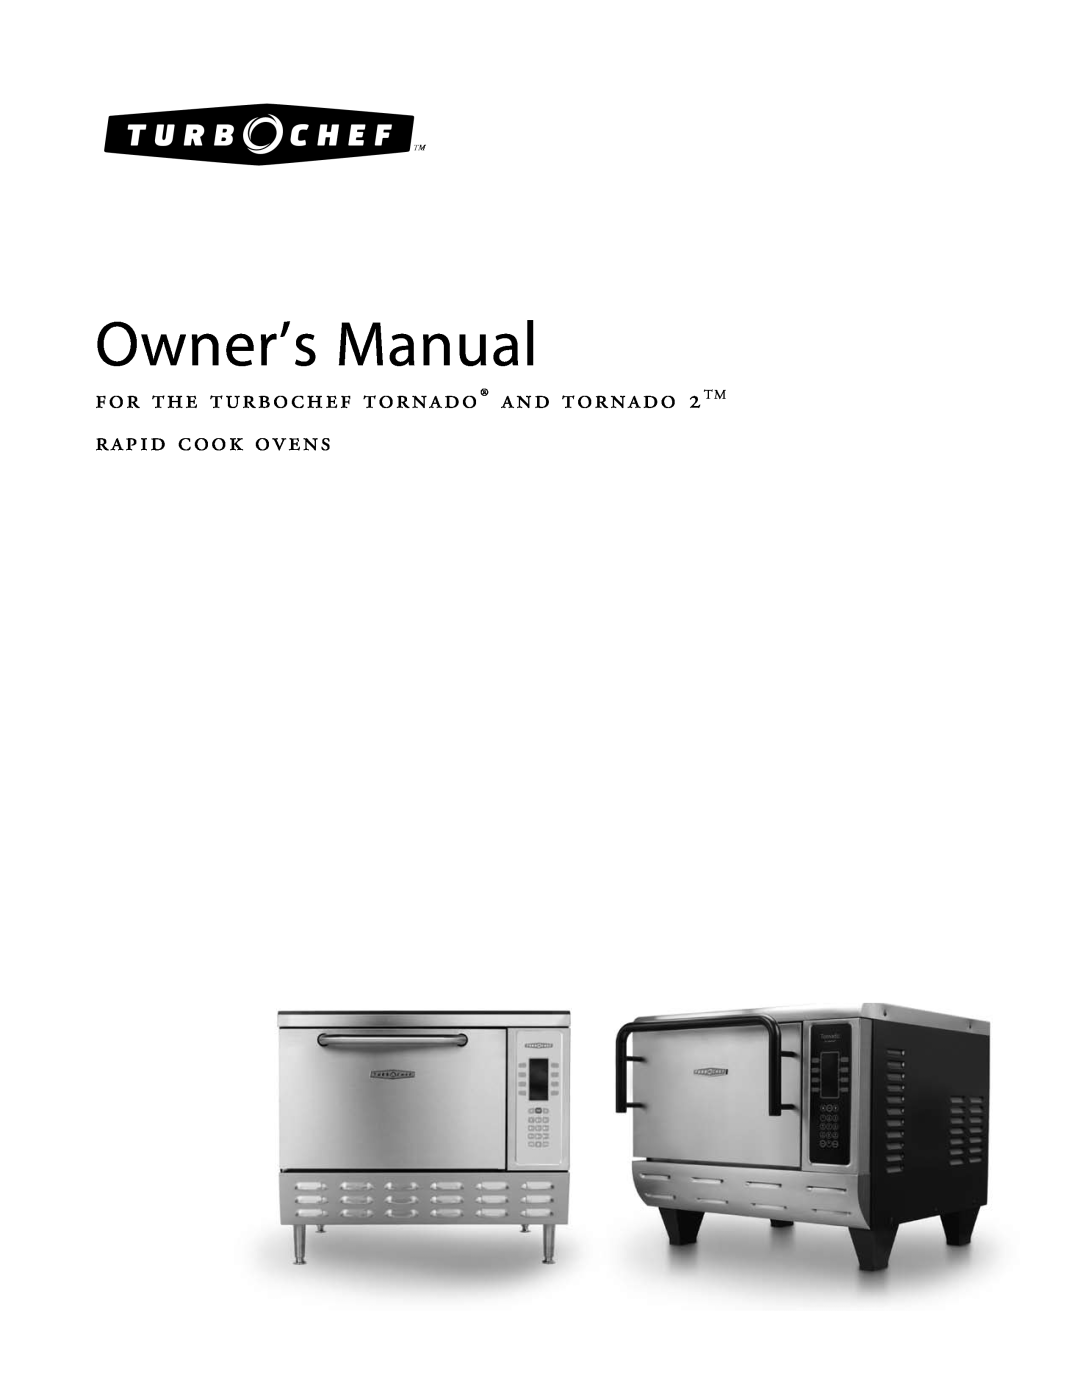 Turbo Chef Technologies Tornado 2 owner manual for the turbochef tornado and tornado 2TM rapid cook ovens 